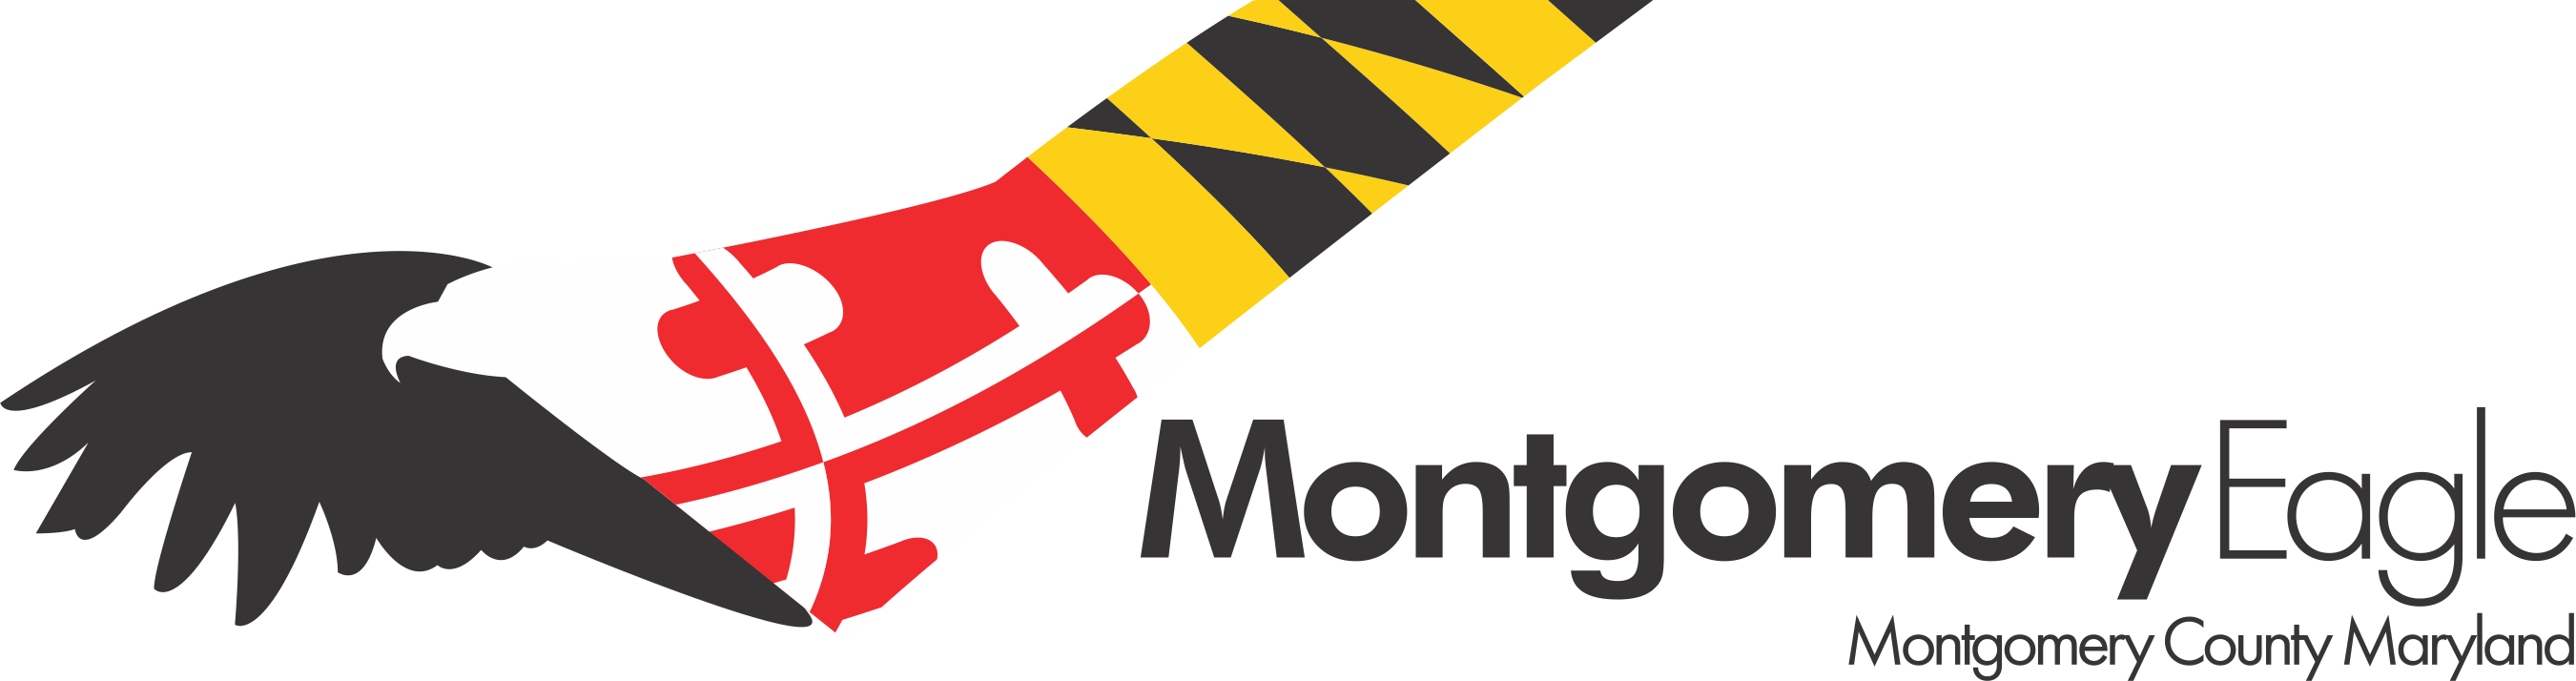 Montgomery Eagle Inc.